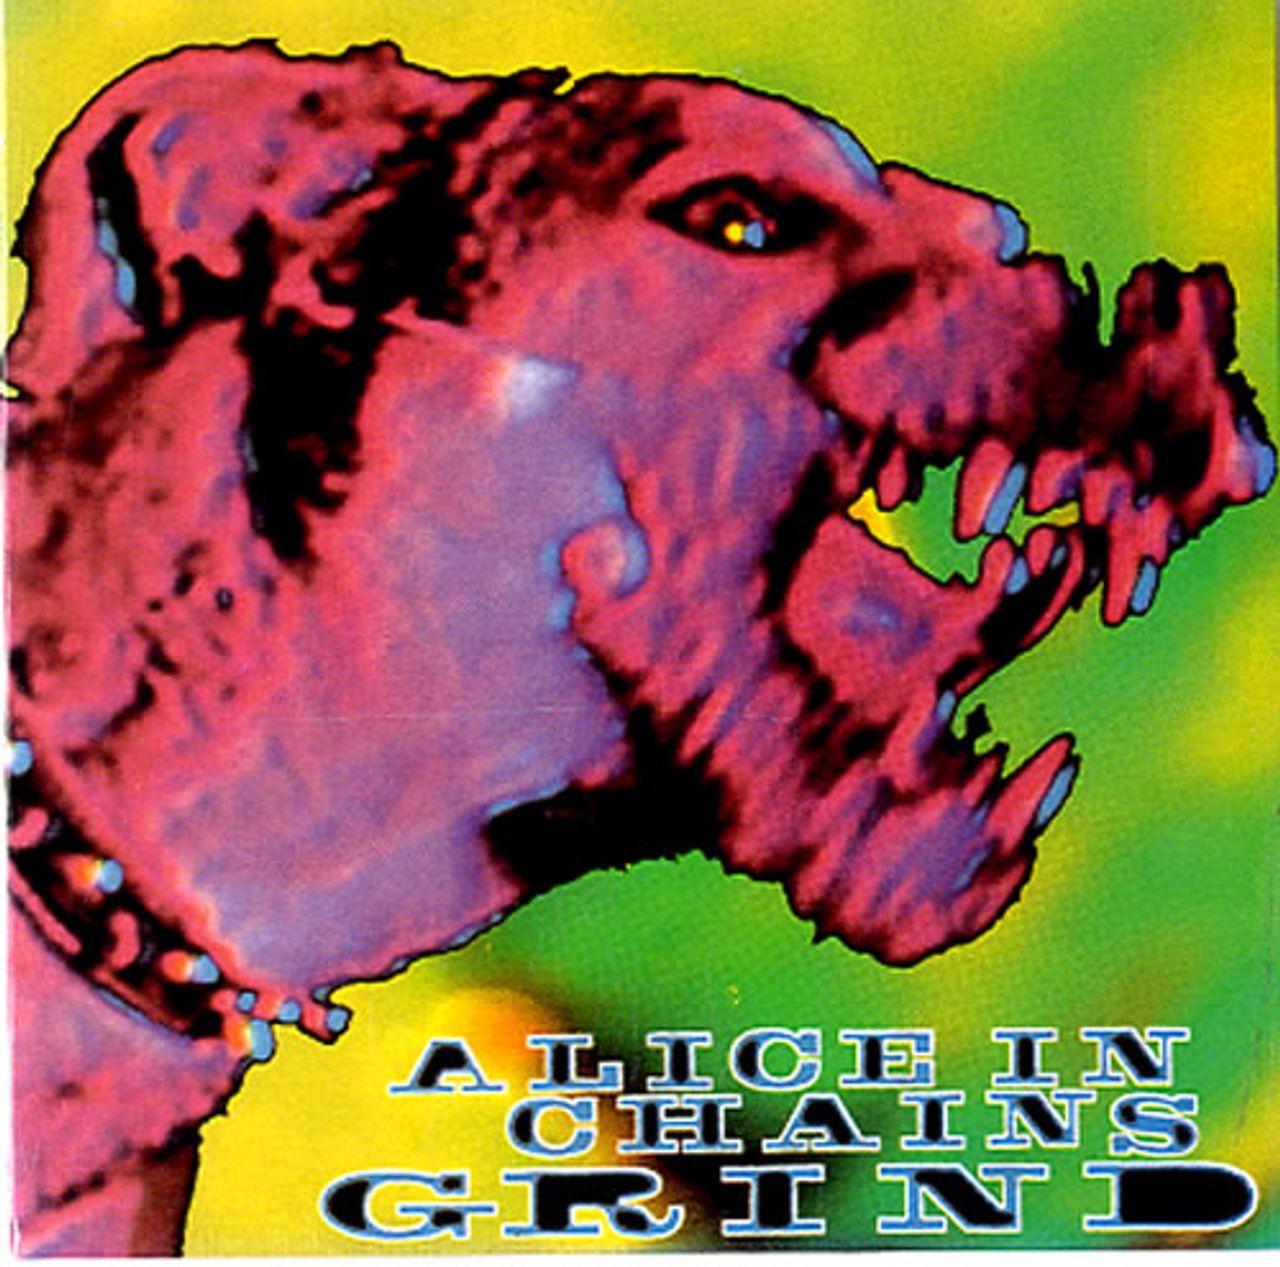 Alice In Chains Grind UK Promo CD single — RareVinyl.com